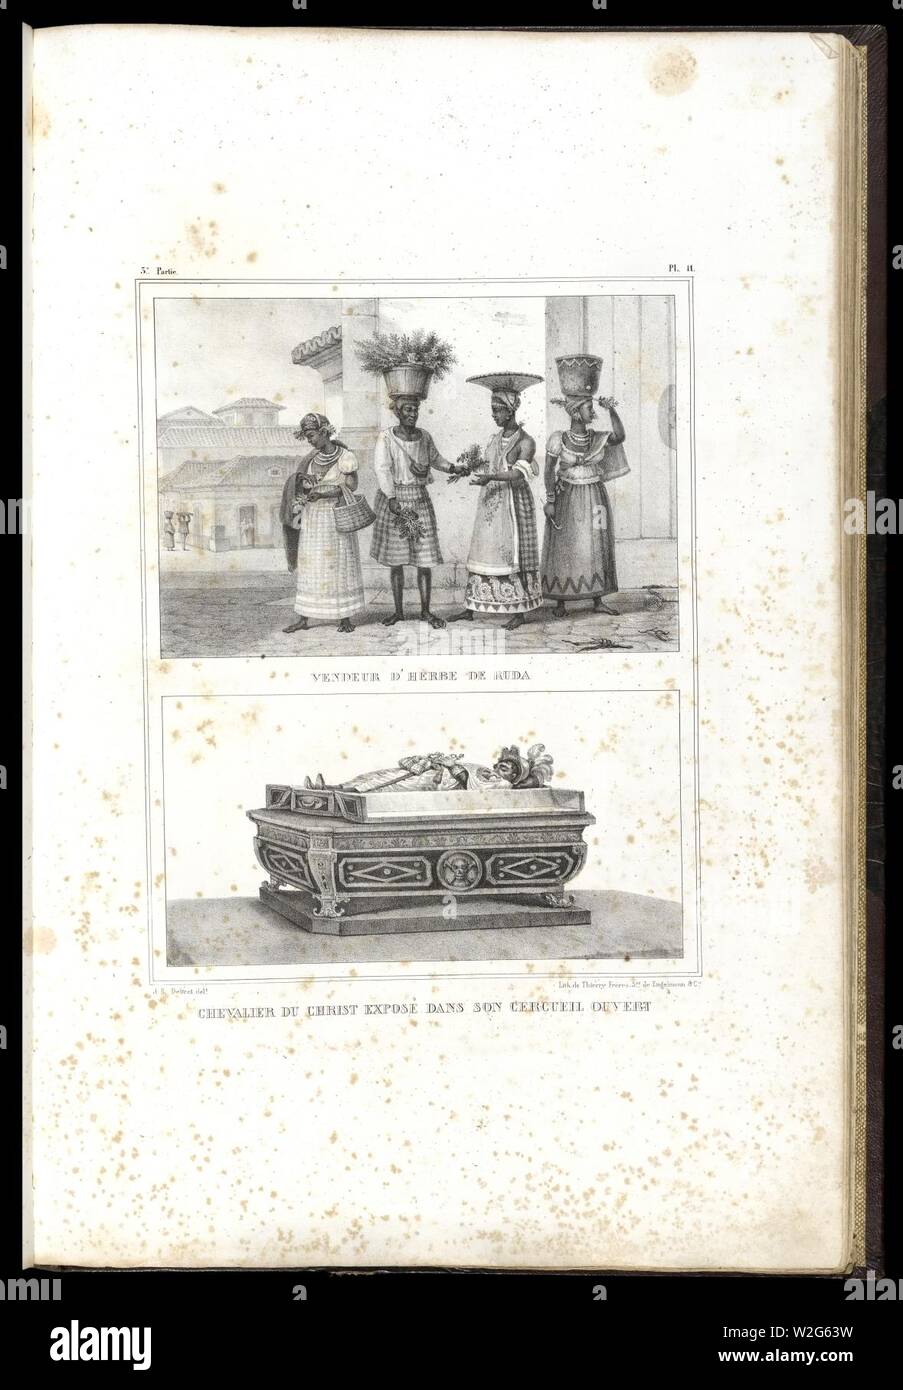 Chevalier du Christ exposè dans son cercueil ouvert (2), da Coleção Brasiliana Iconográfica. Stock Photo